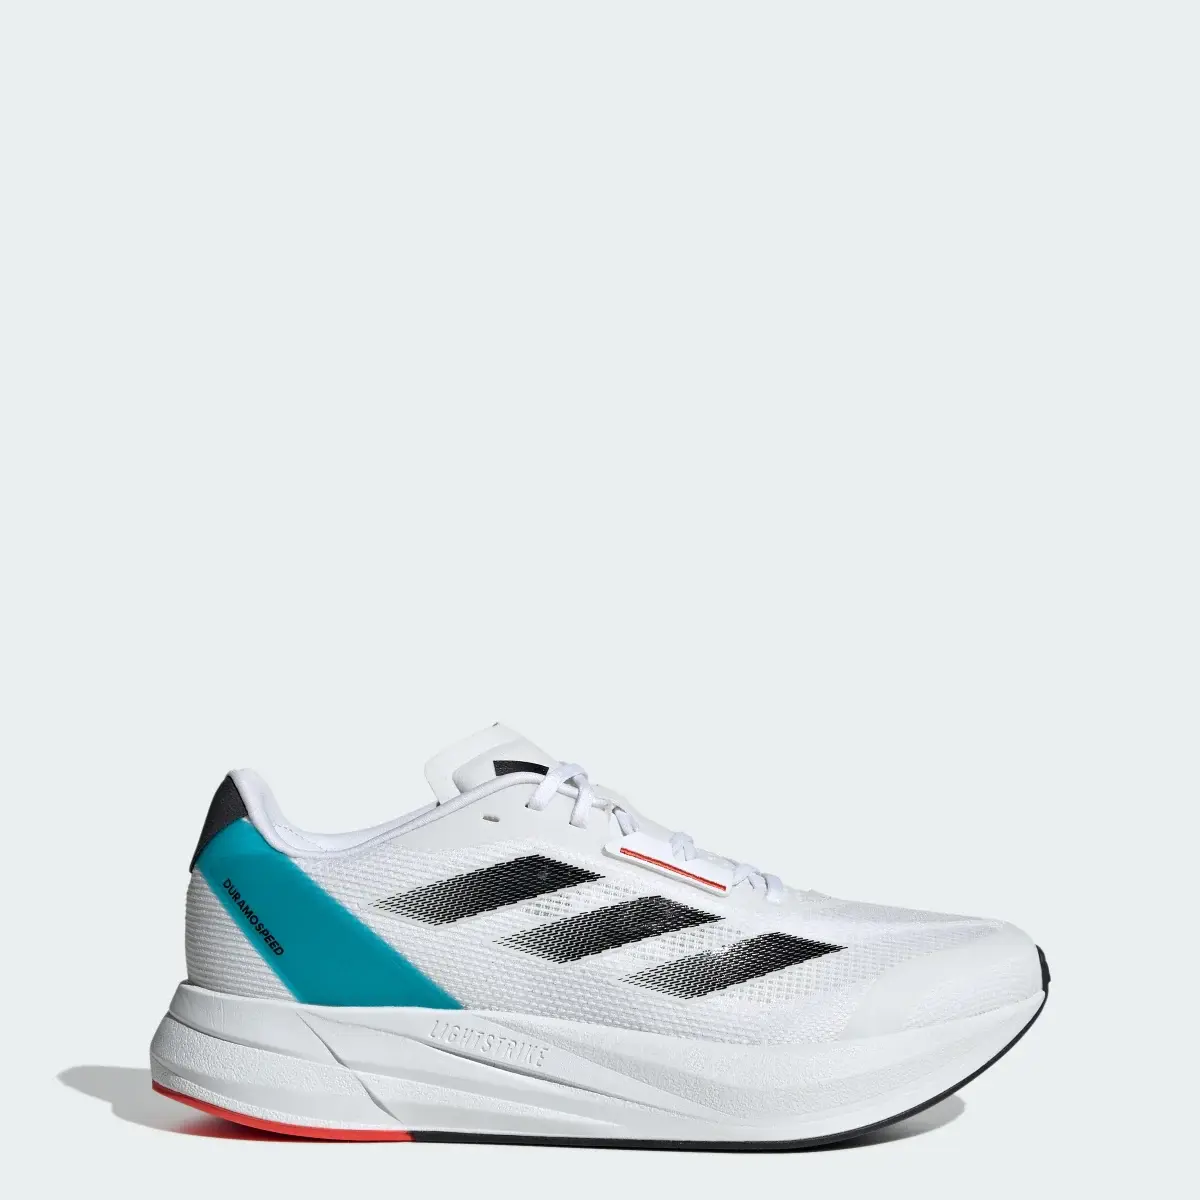 Adidas Duramo Speed Ayakkabı. 1